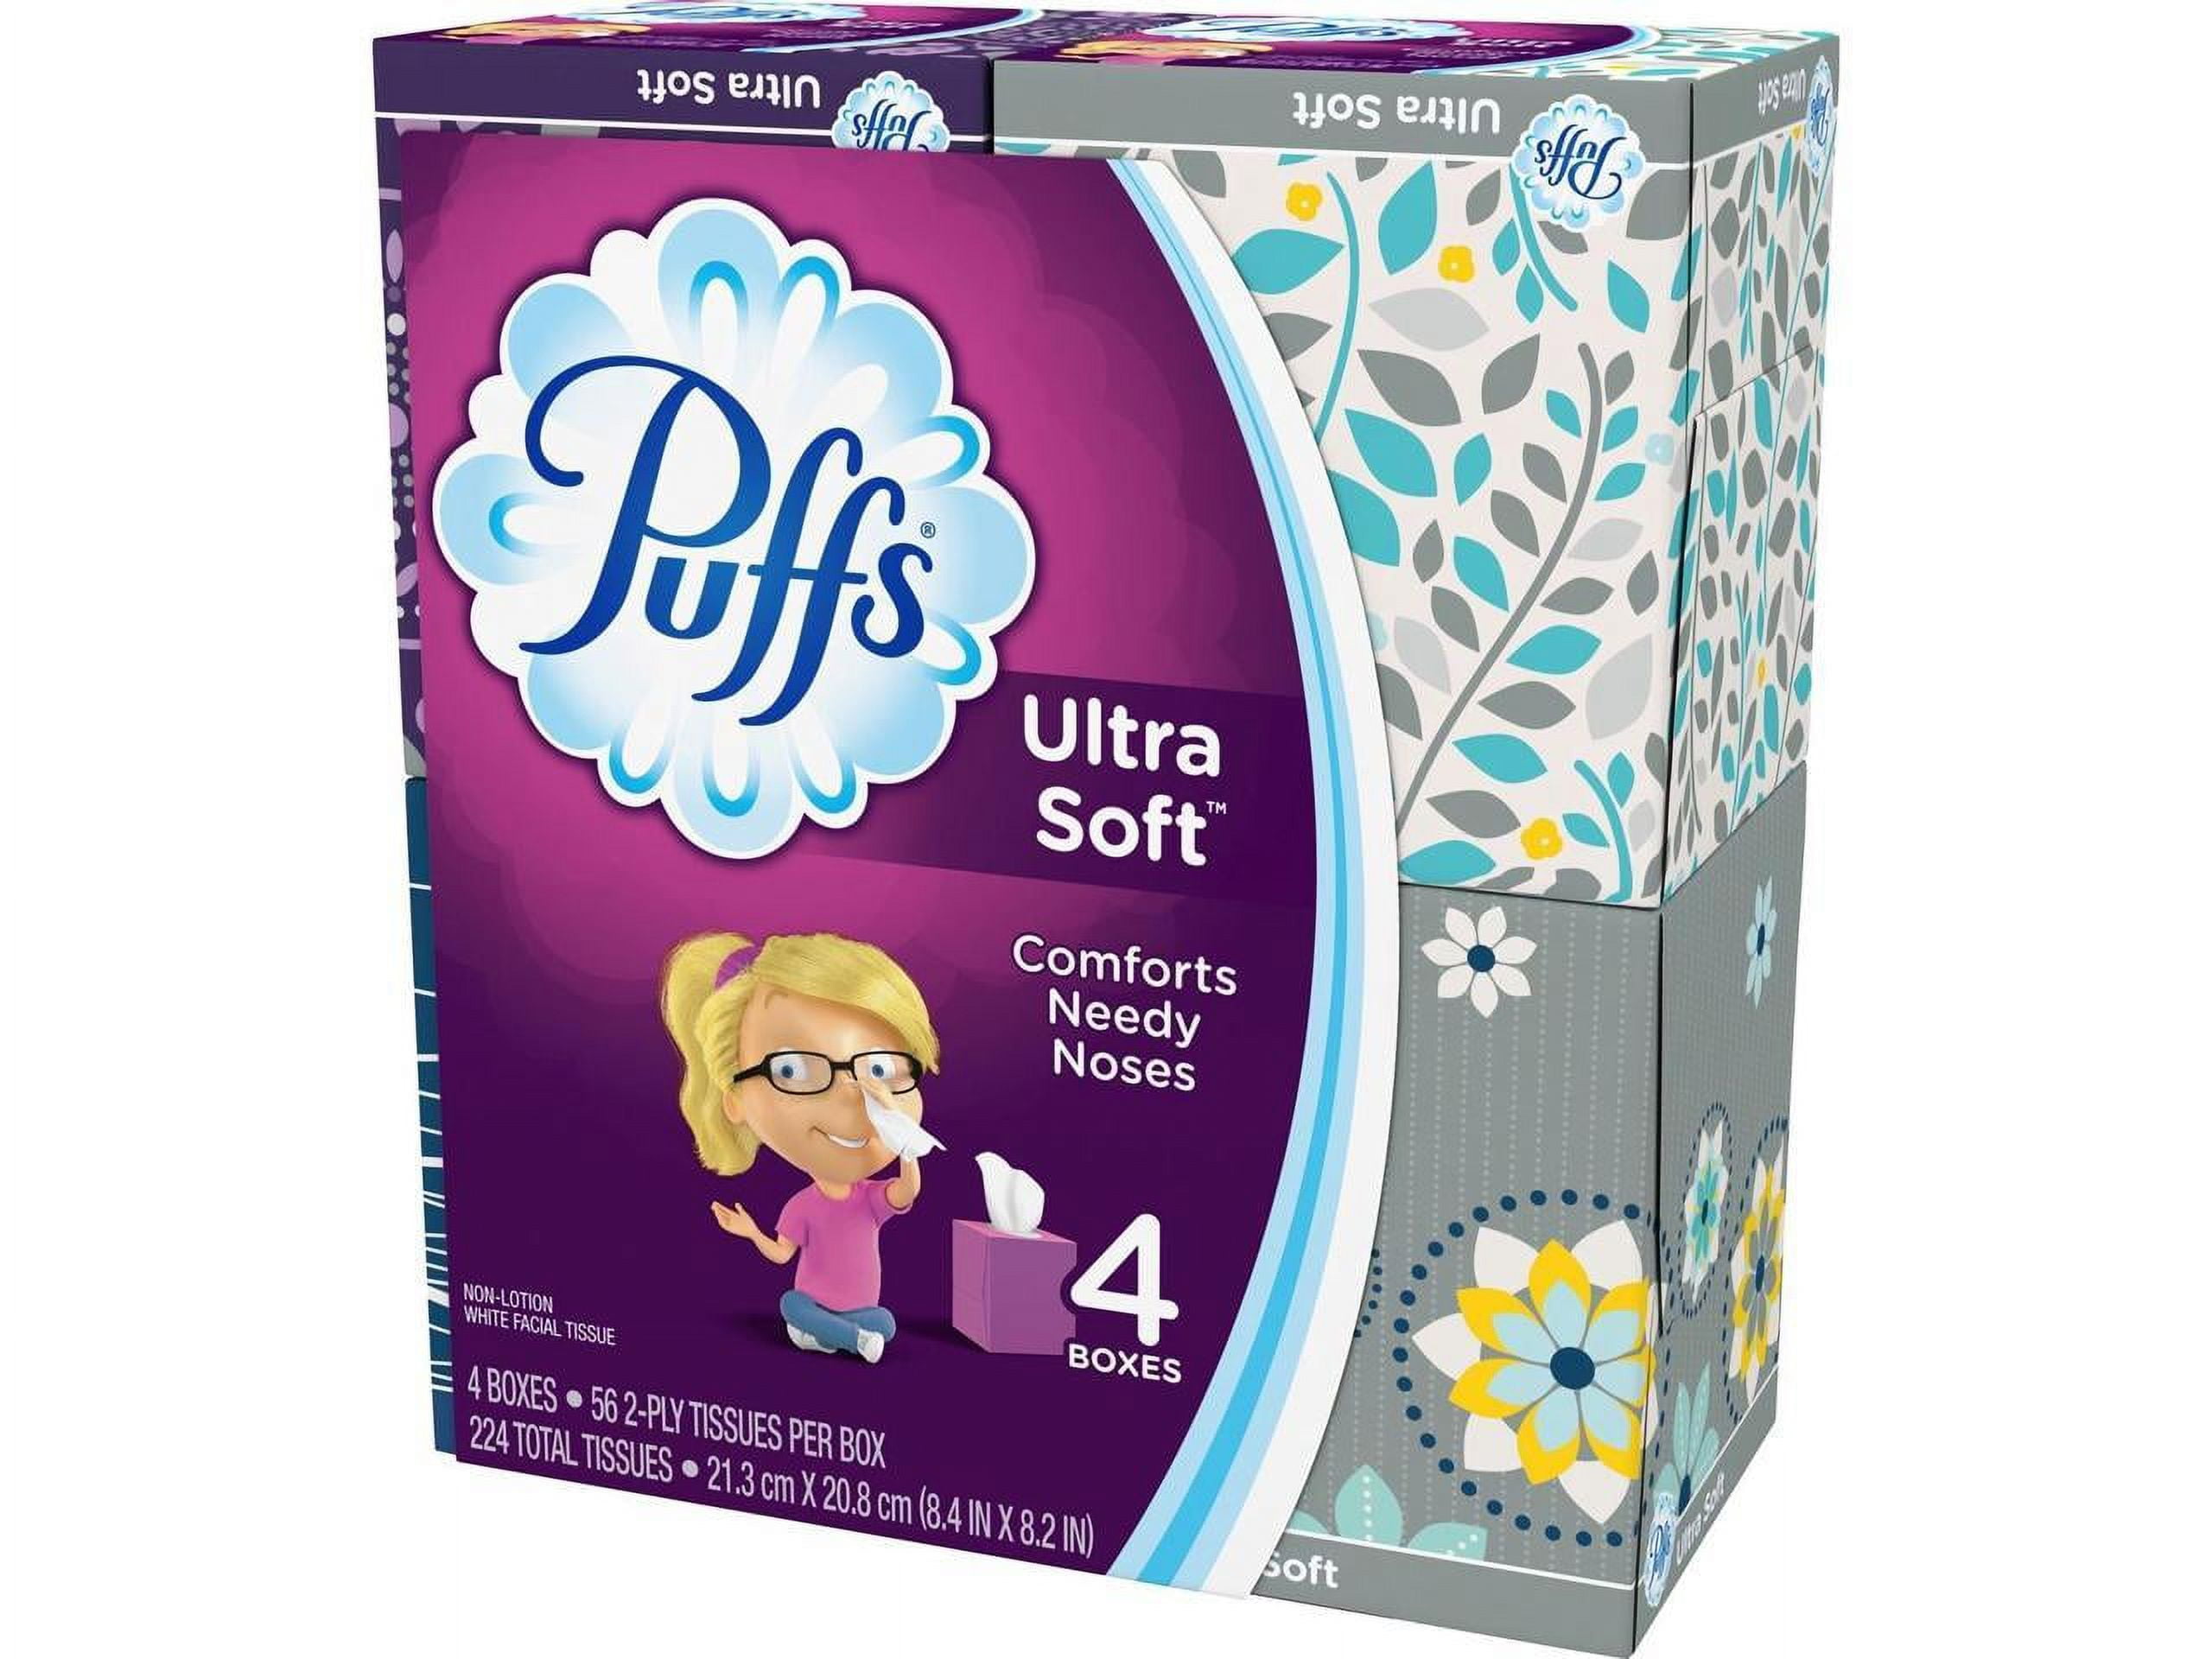 Puffs Plus Lotion Facial Tissues, 8 Family Boxes, 120 Tissues per Box